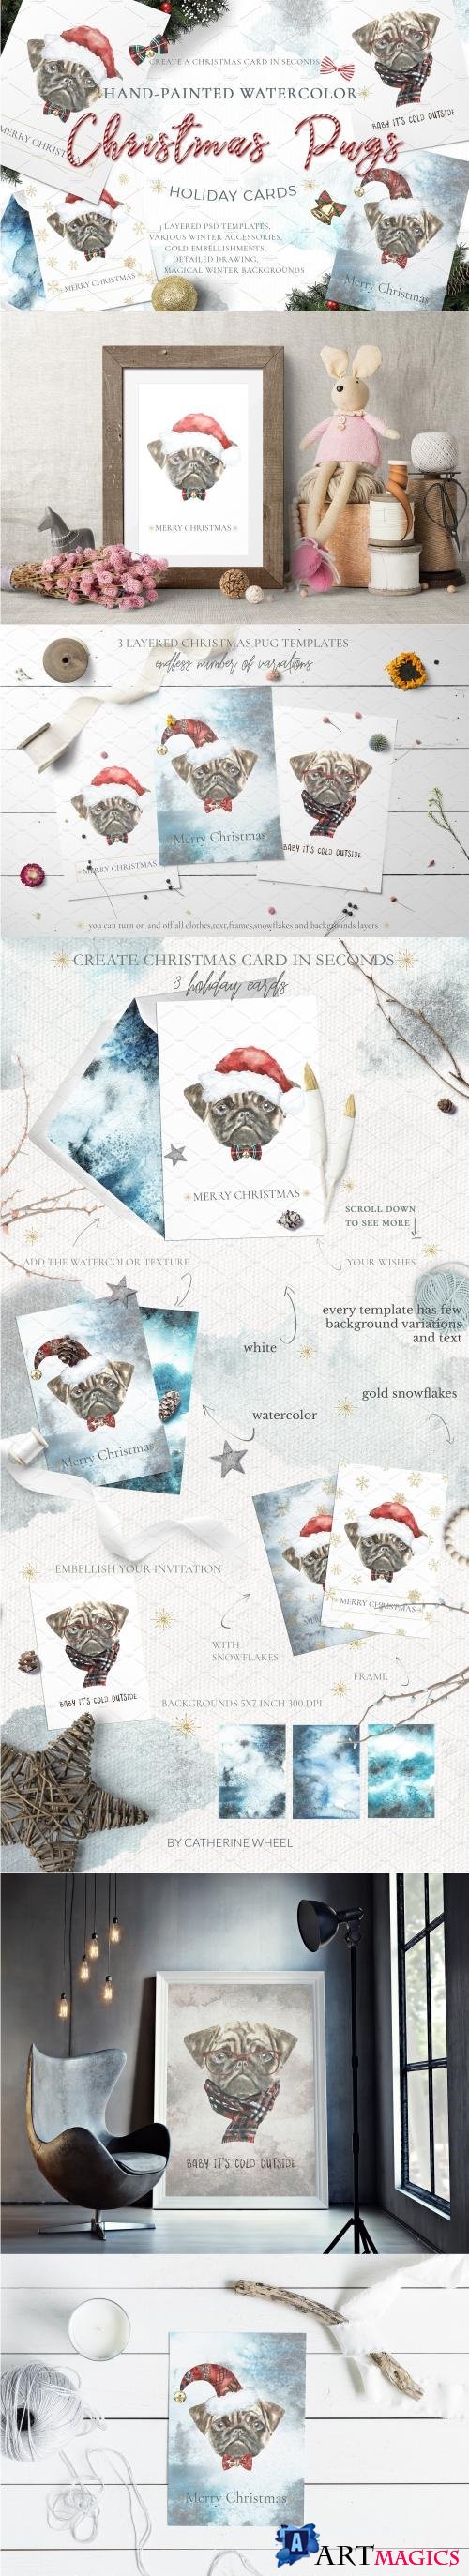 Christmas Watercolor Pug Cards - 1981246